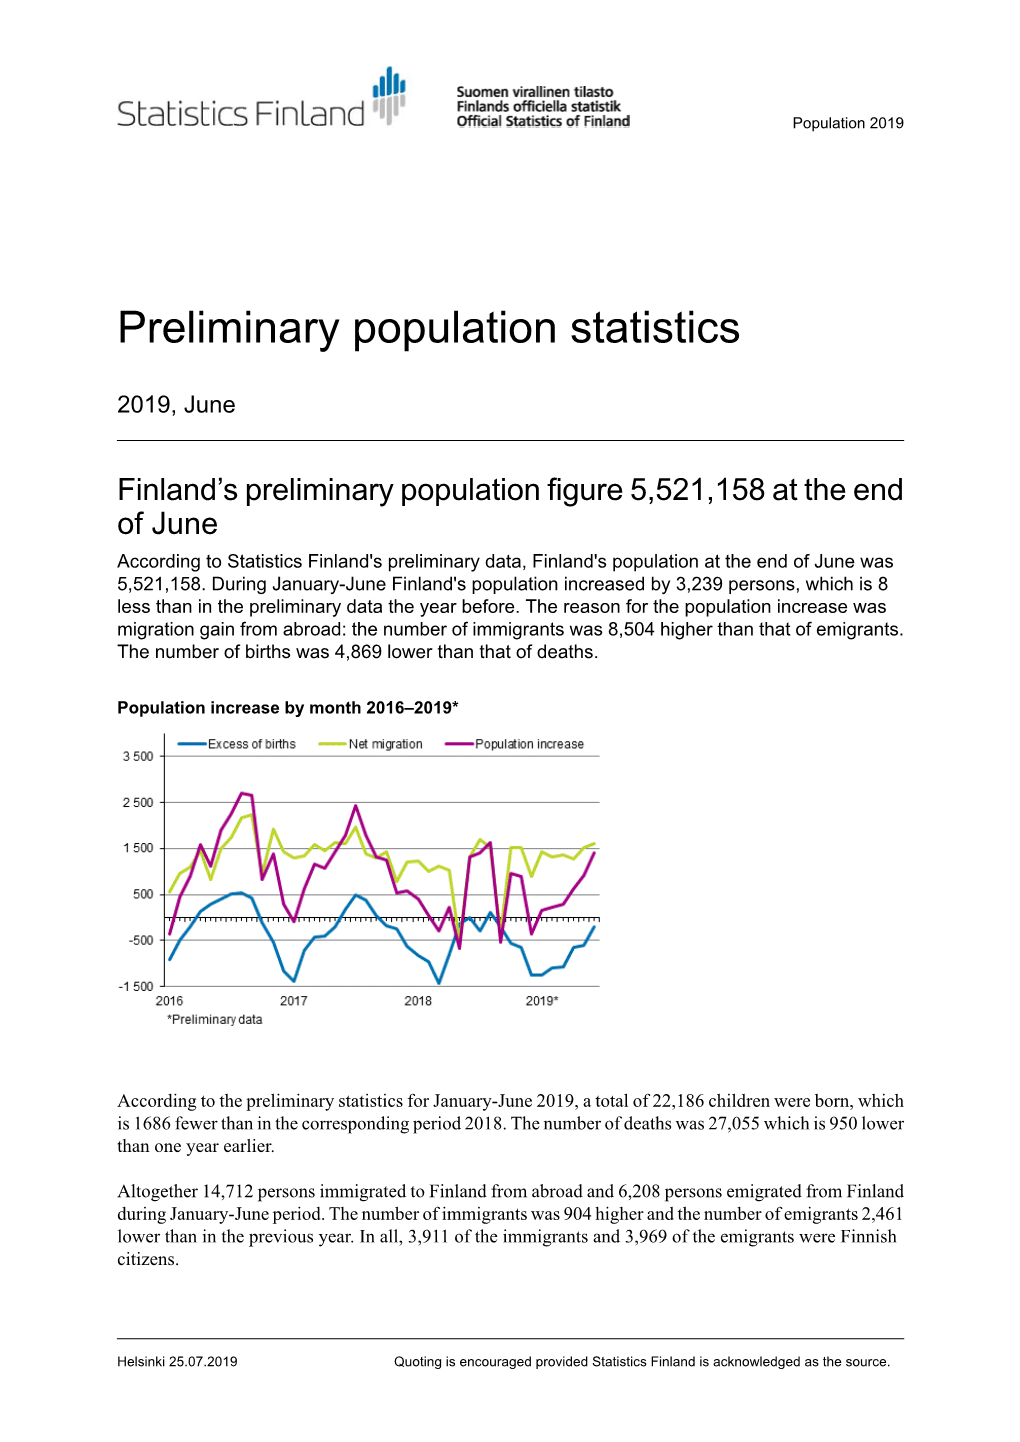 Preliminary Population Statistics 2019, June